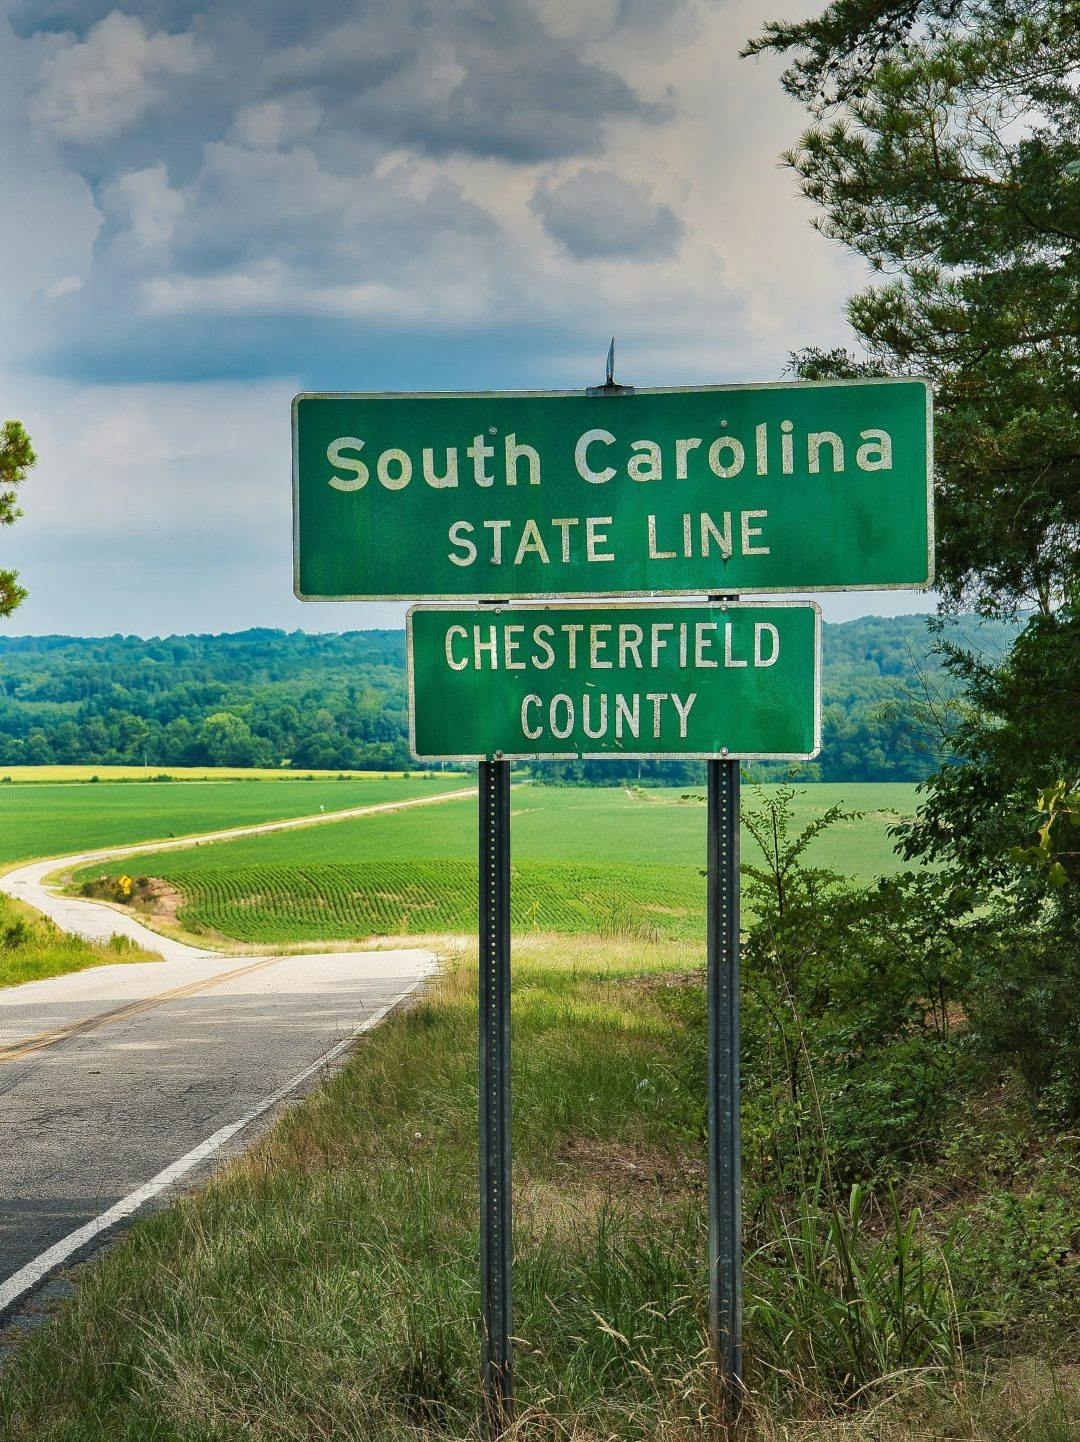 South Carolina State line sign